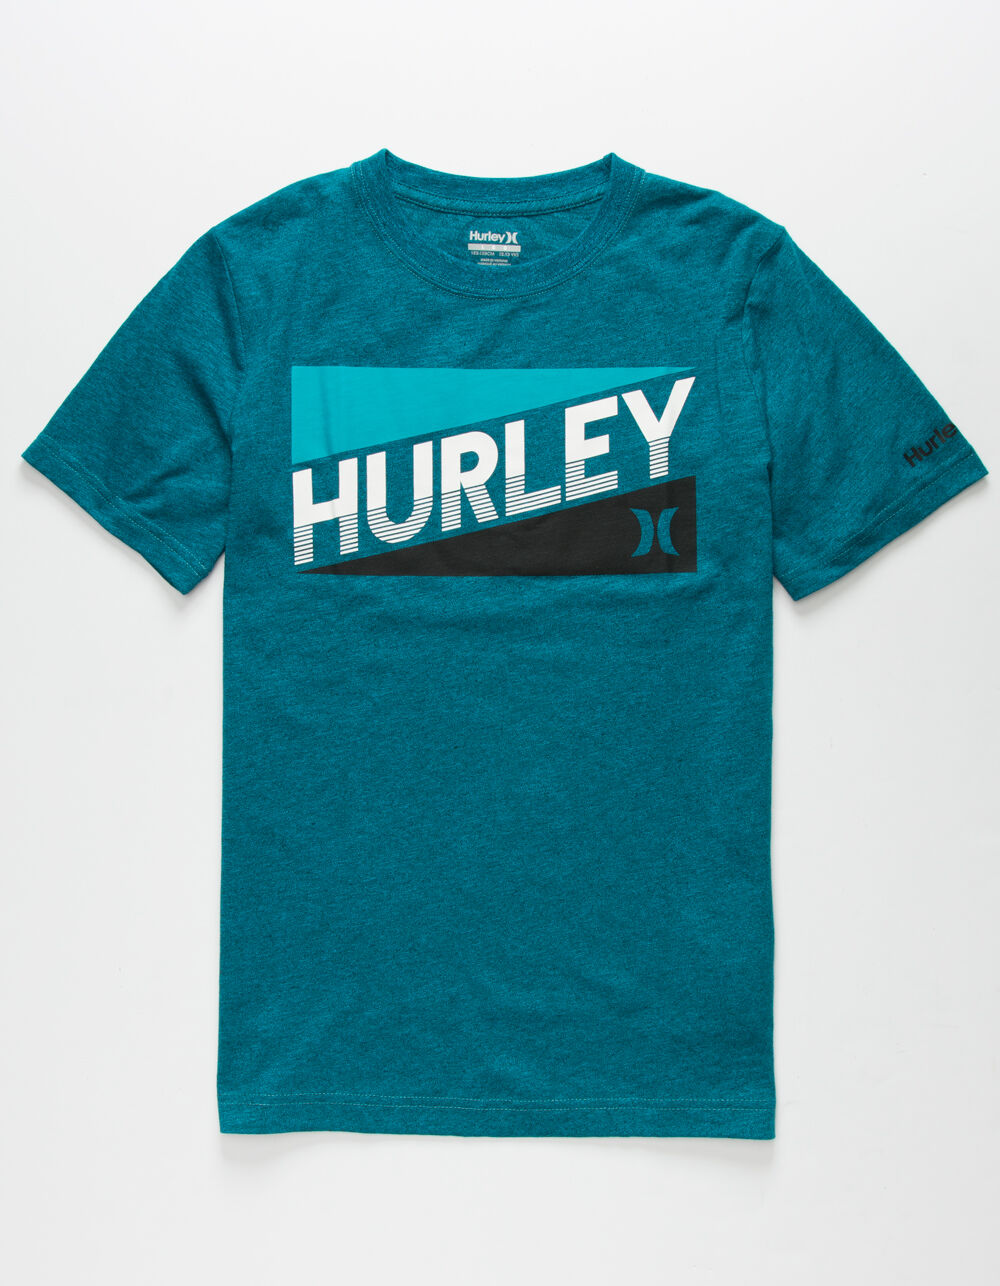 HURLEY New Stadium Lines Boys Teal Green T-Shirt - TEAL GREEN | Tillys